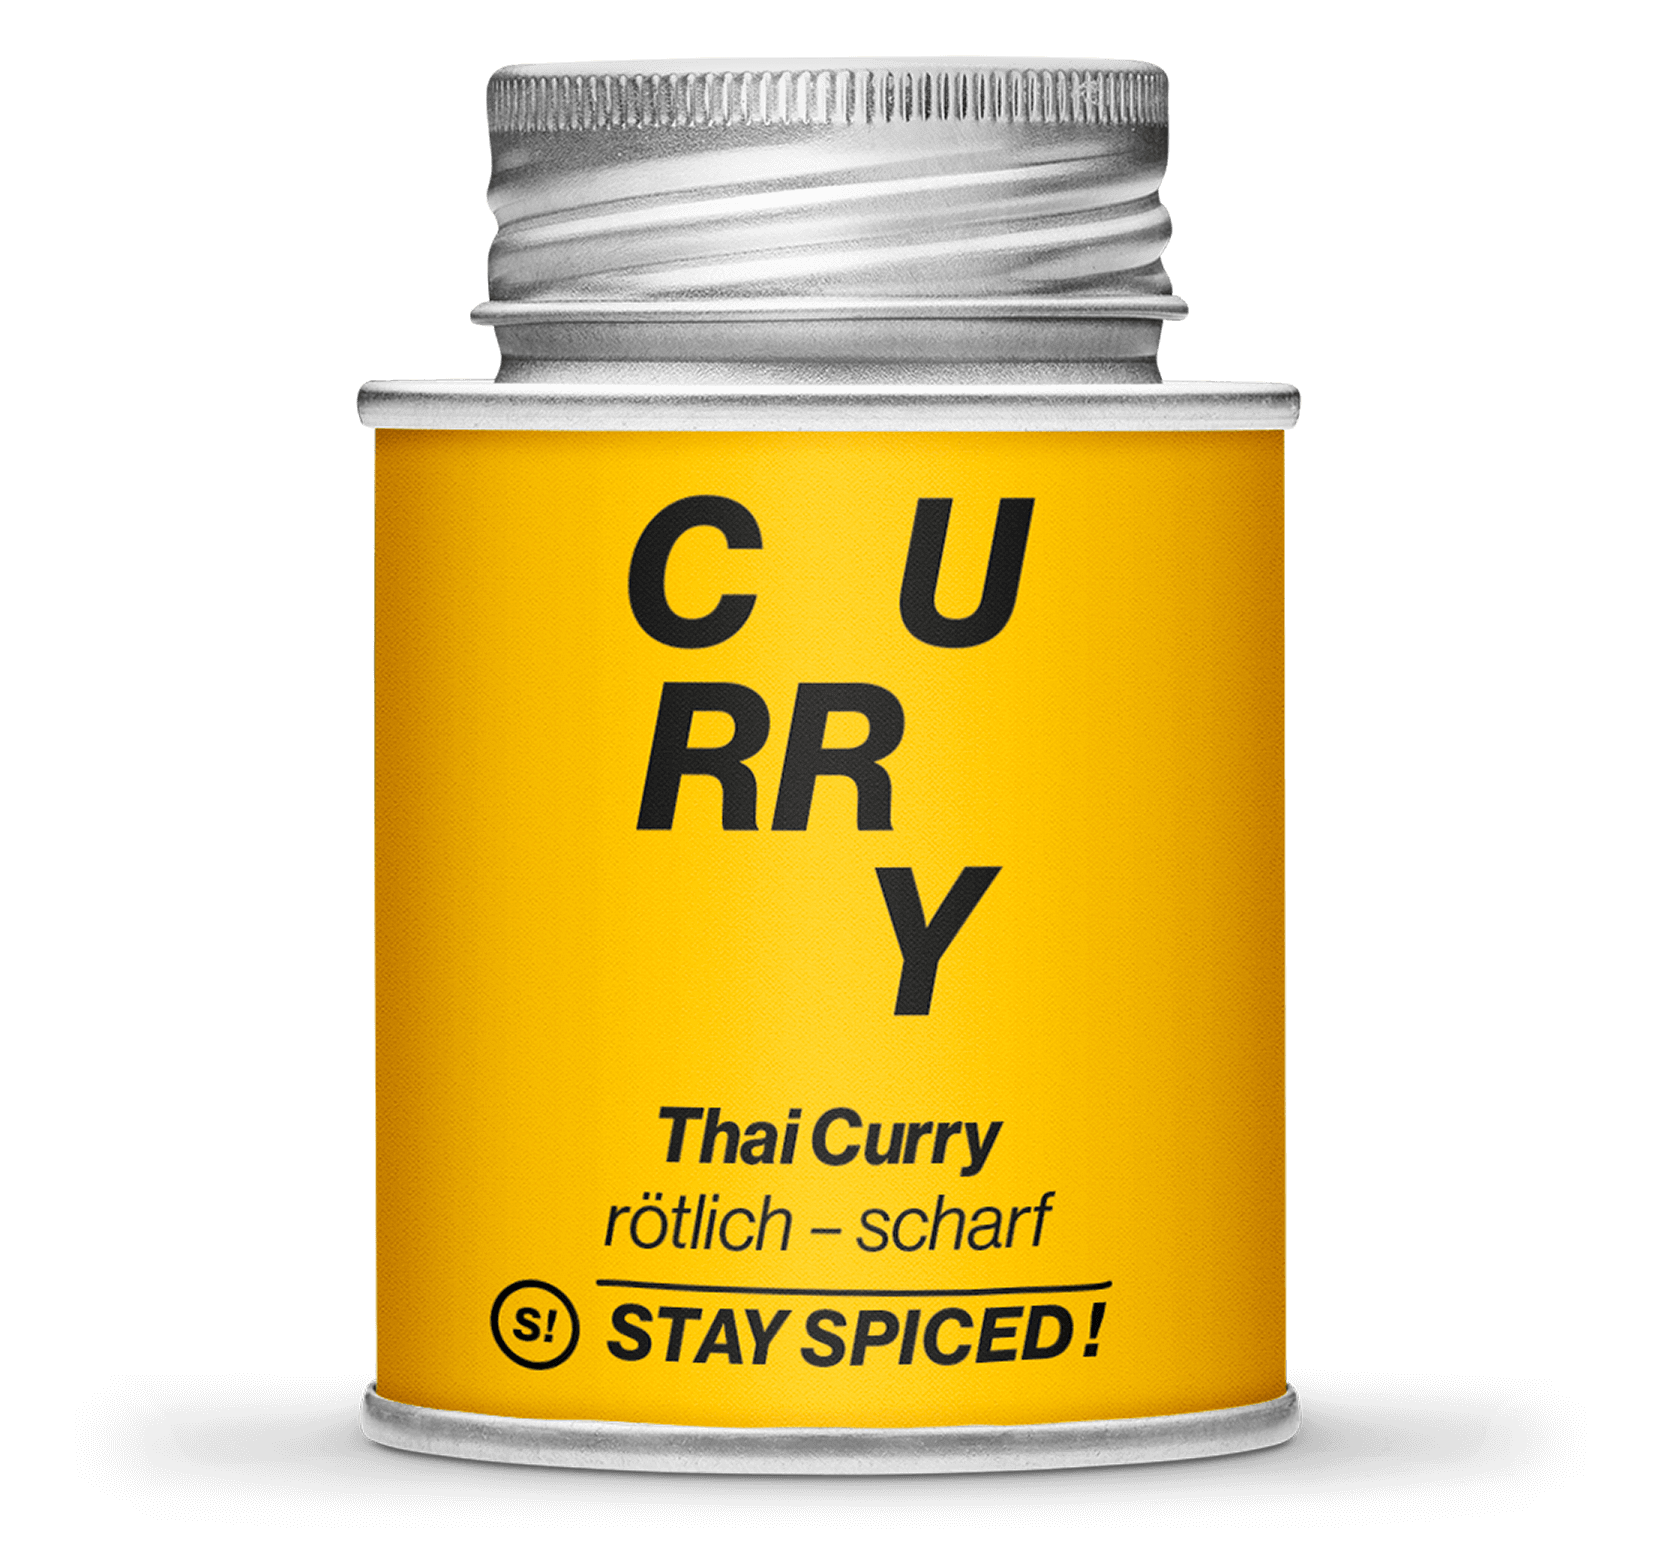 Thai Curry, rötlich-scharf